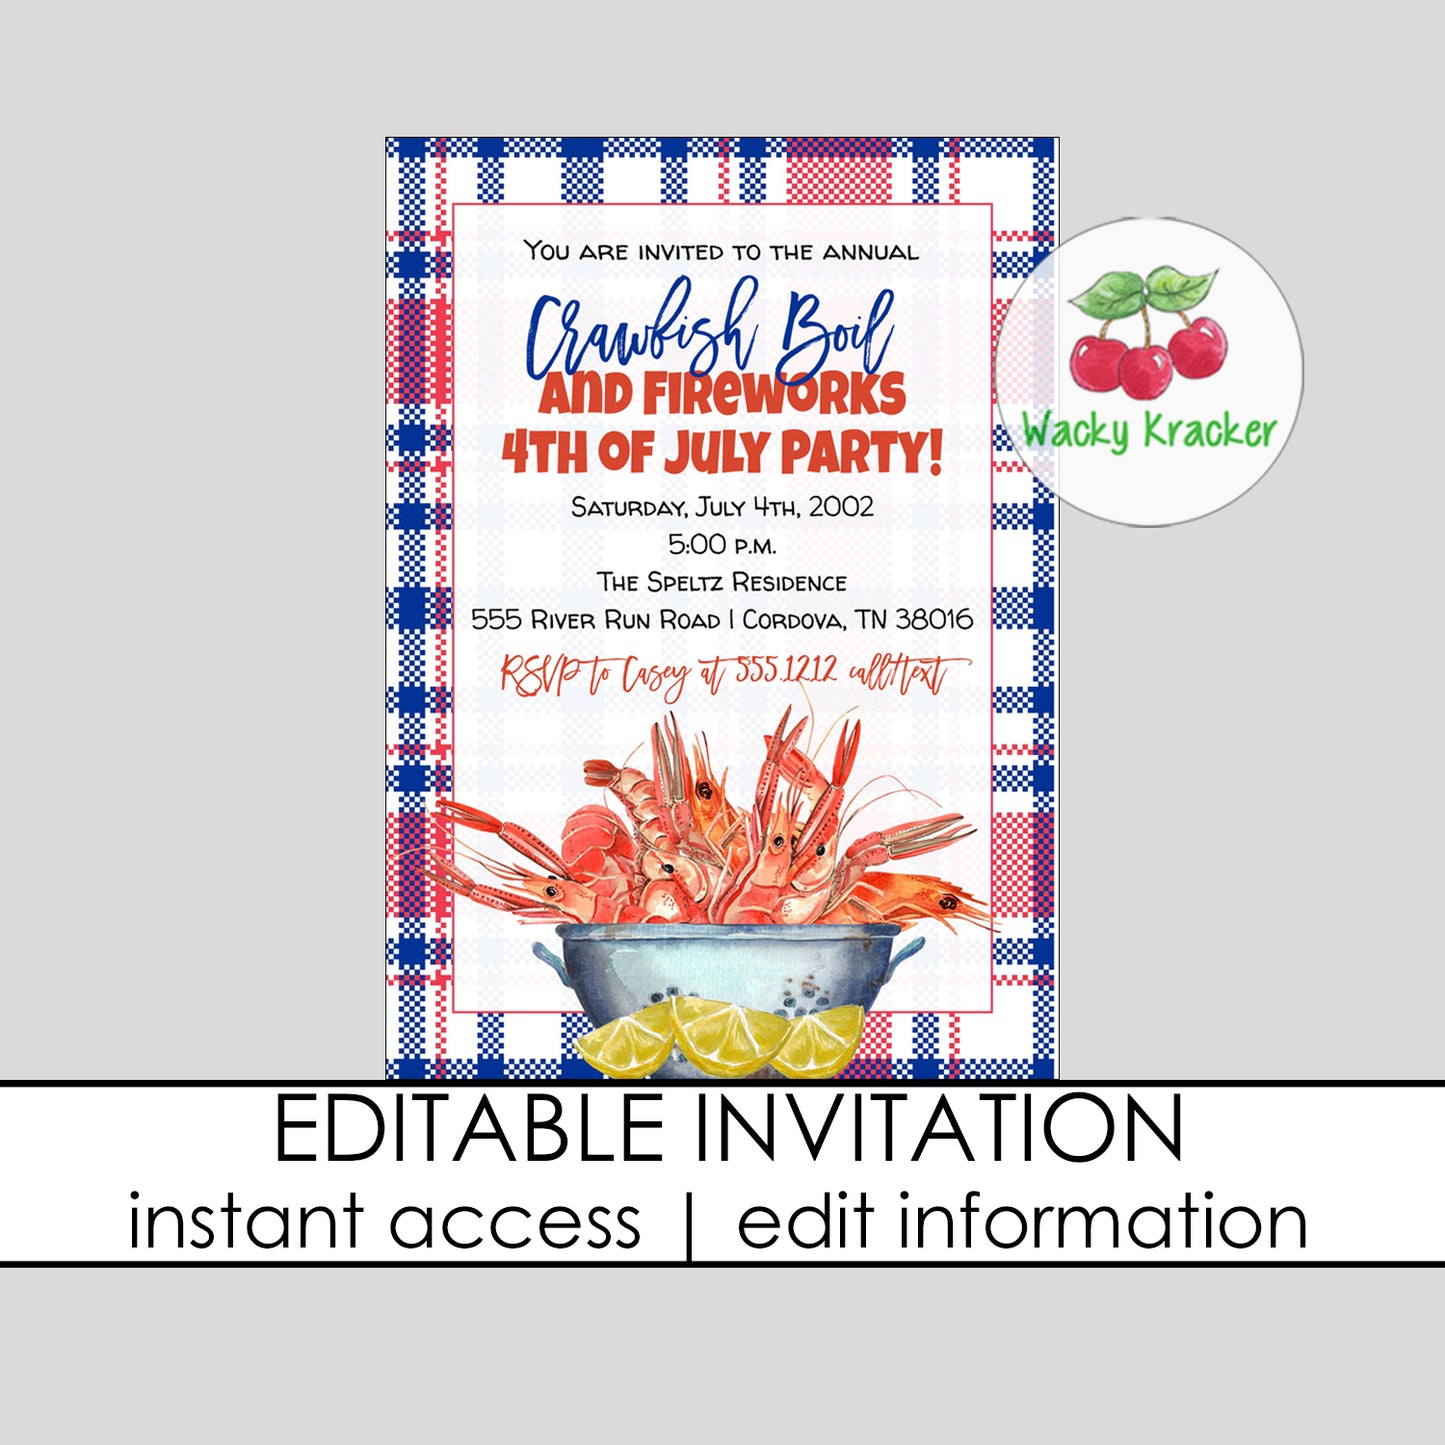 July 4th Crawfish Boil Invitation